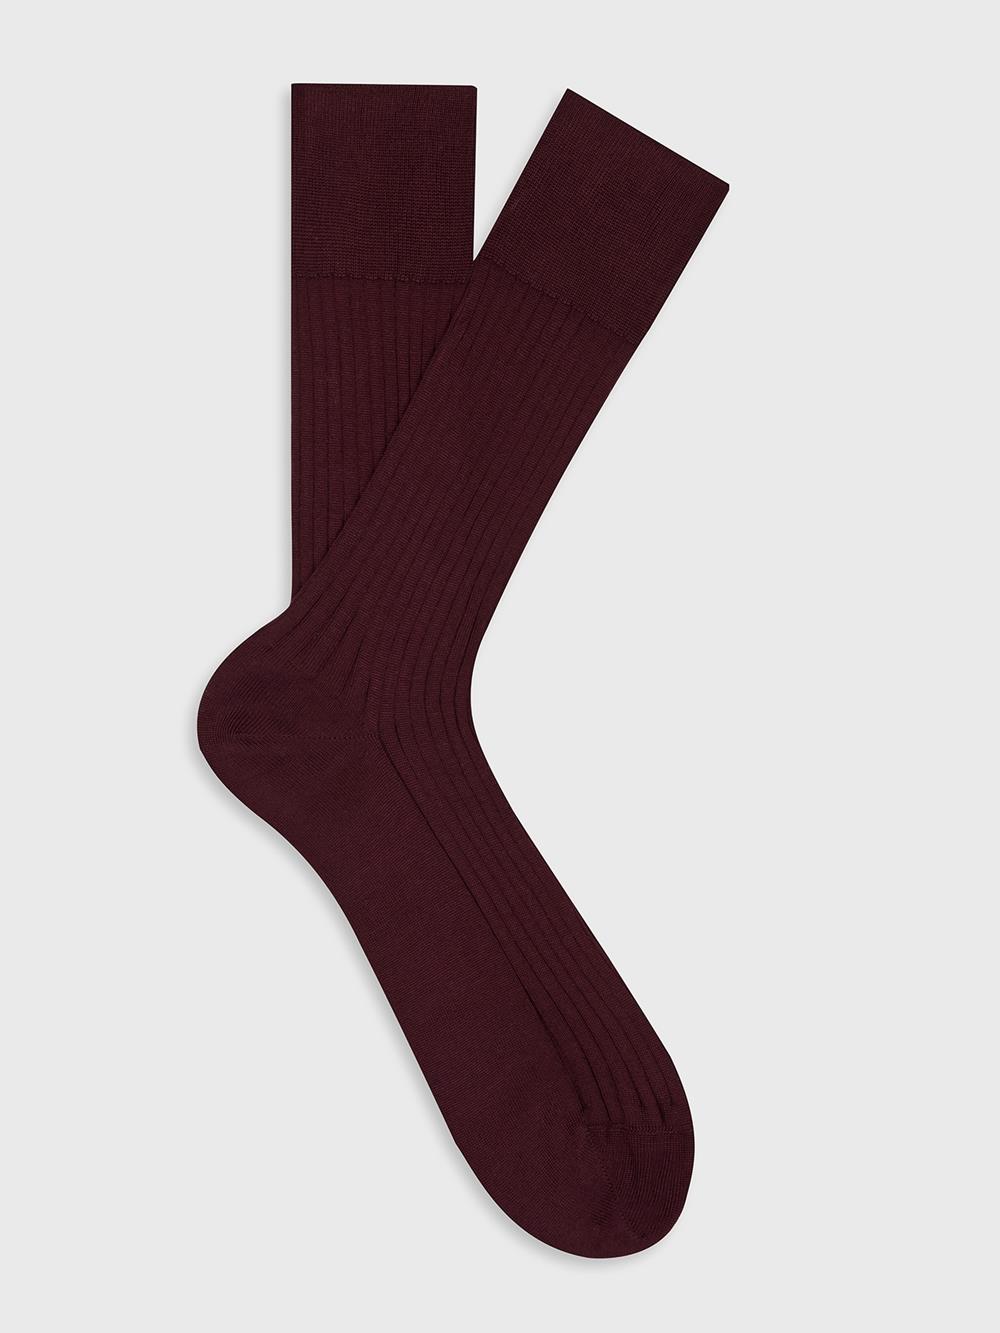 Bret socks in burgundy tartan yarn